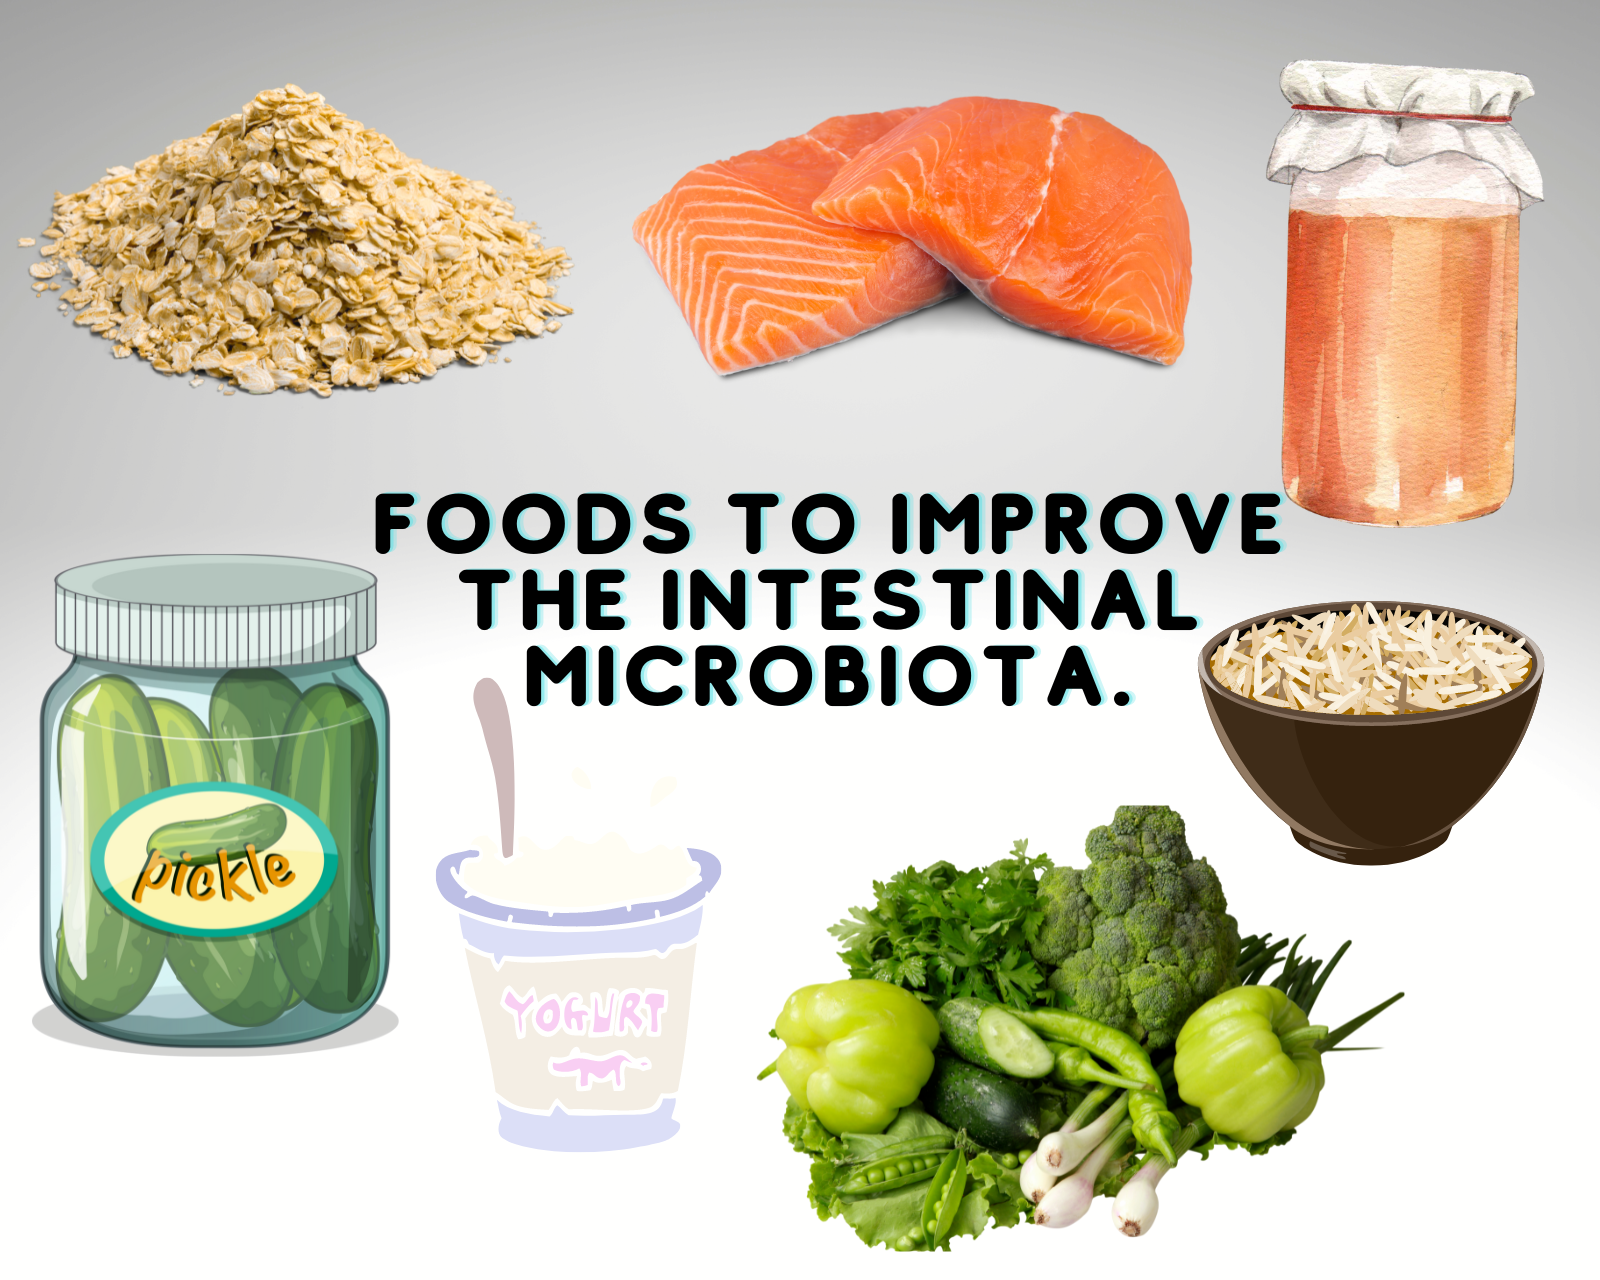 Foods to improve the intestinal microbiota.